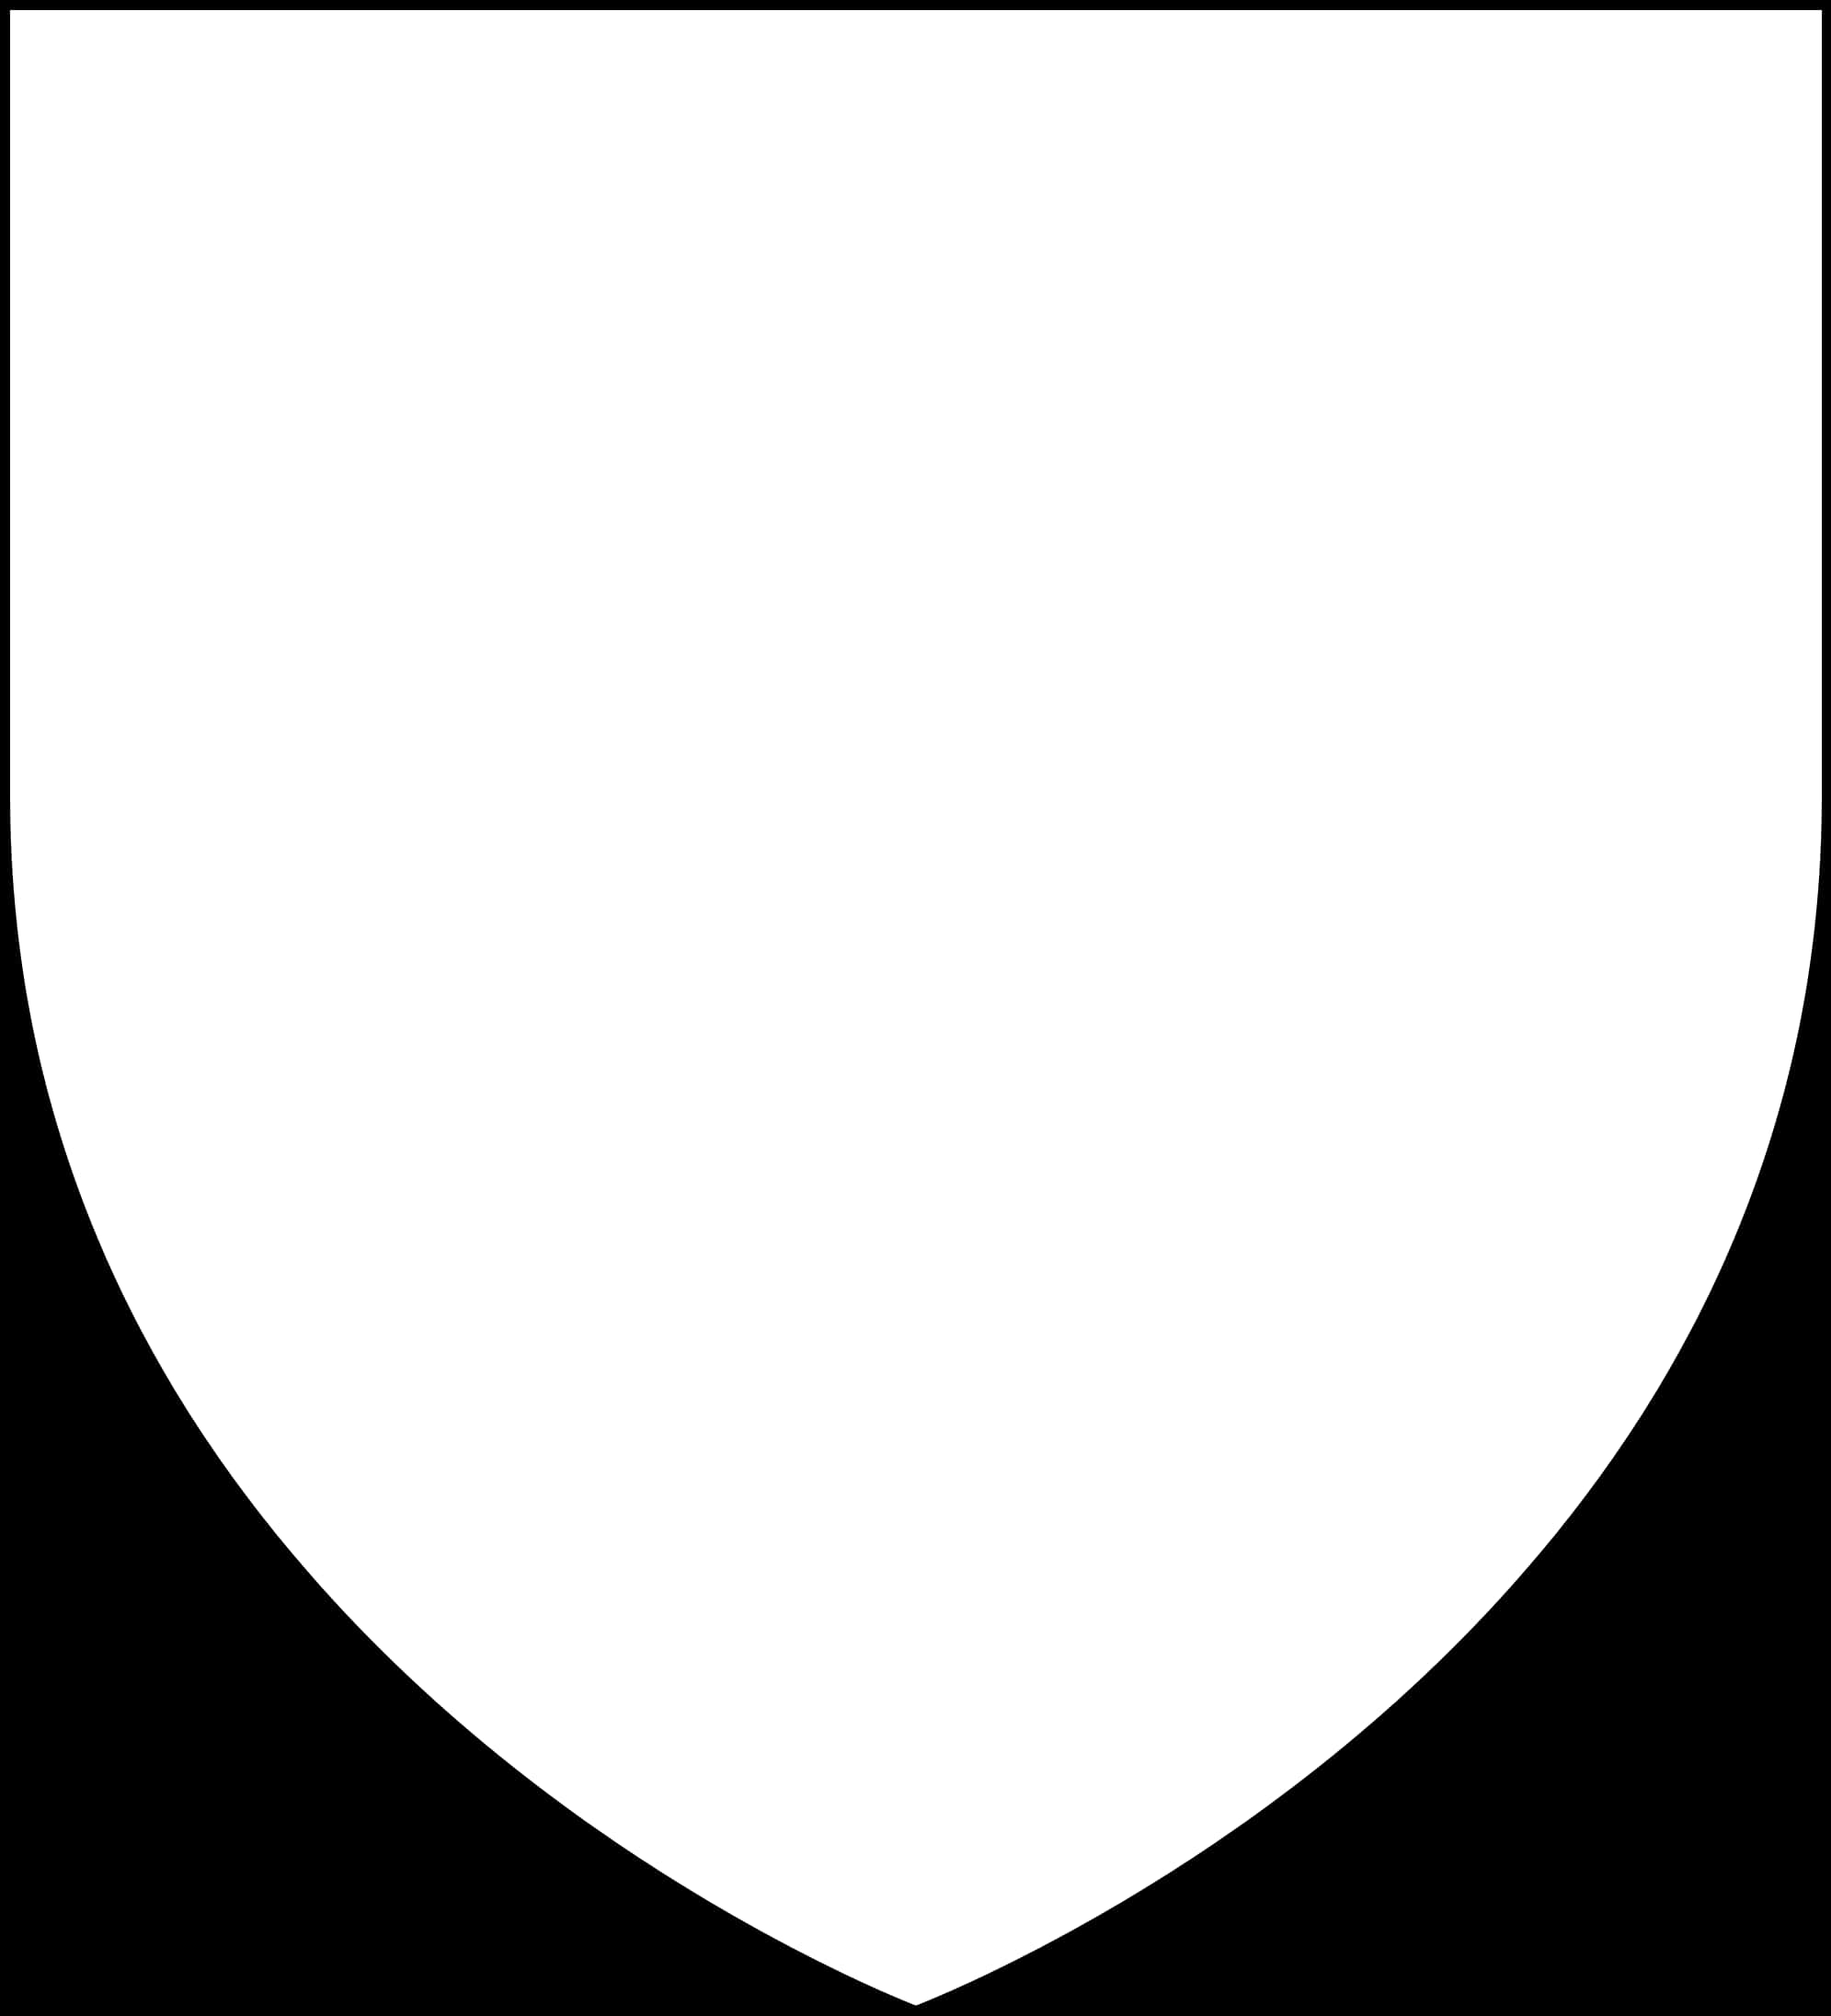 Blank Heraldic Shield Outline